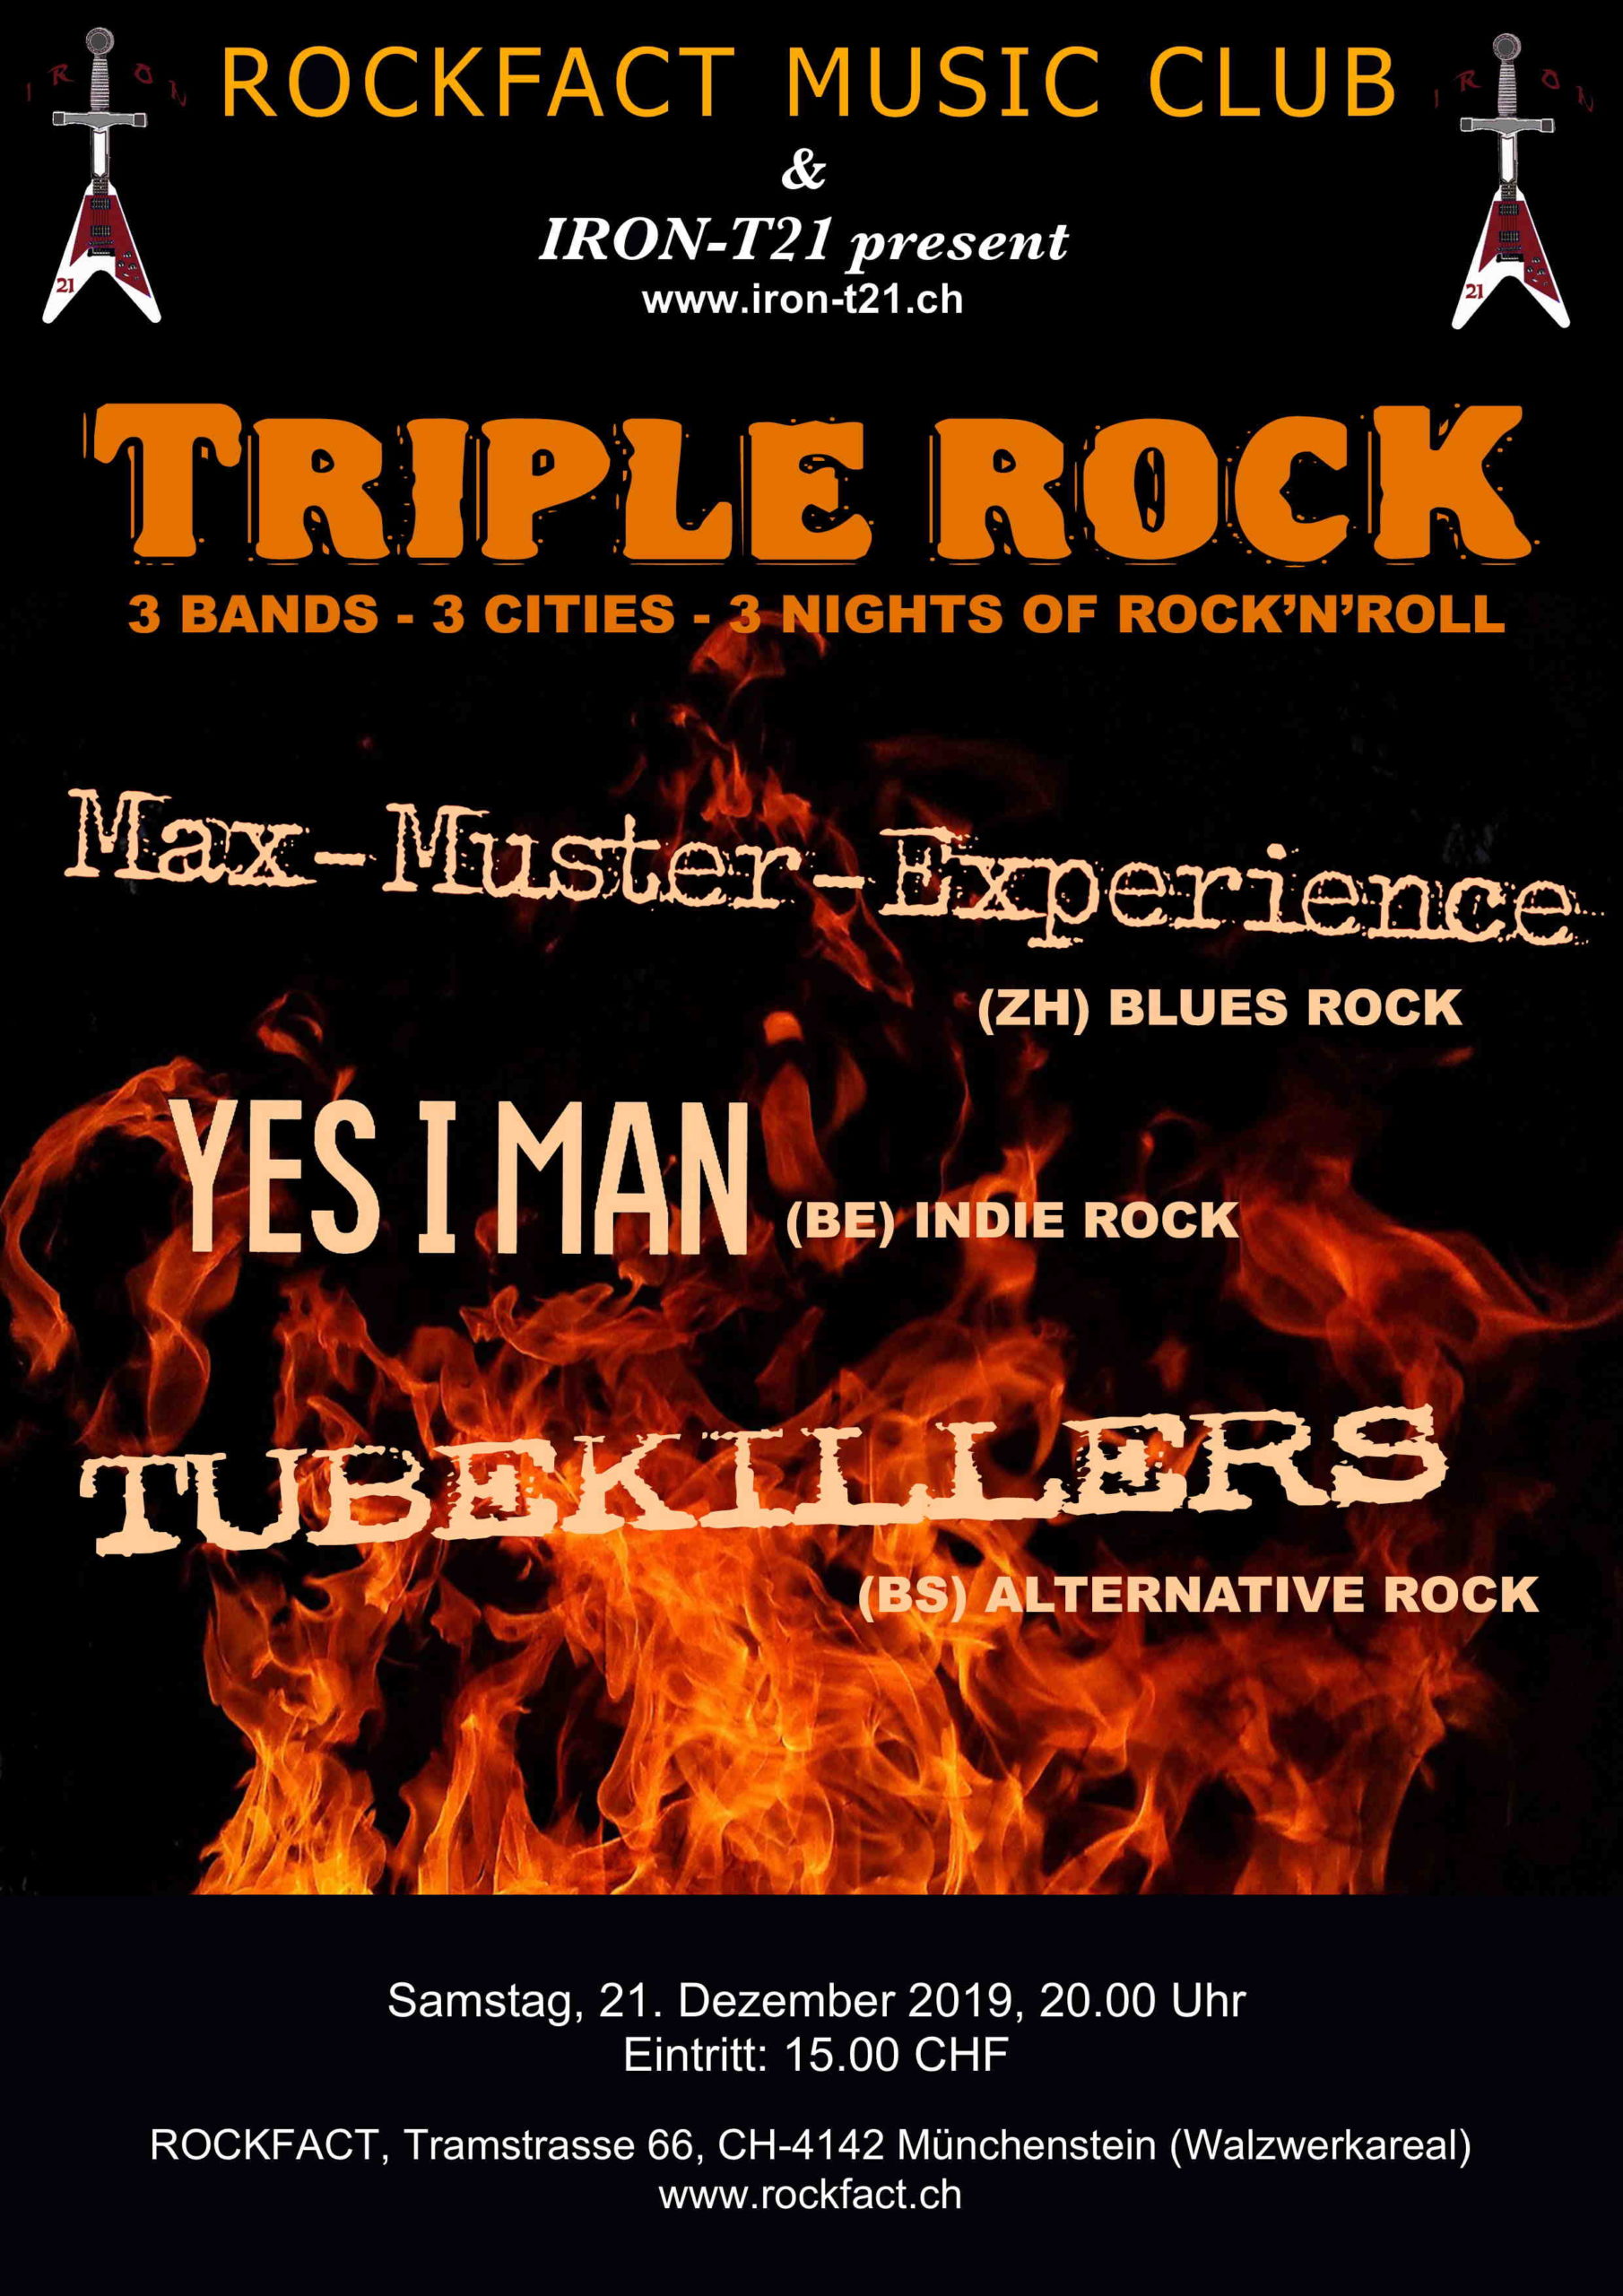 Rockfact Music Club & IronT21 pres. Triple Rock mit MaxMuster